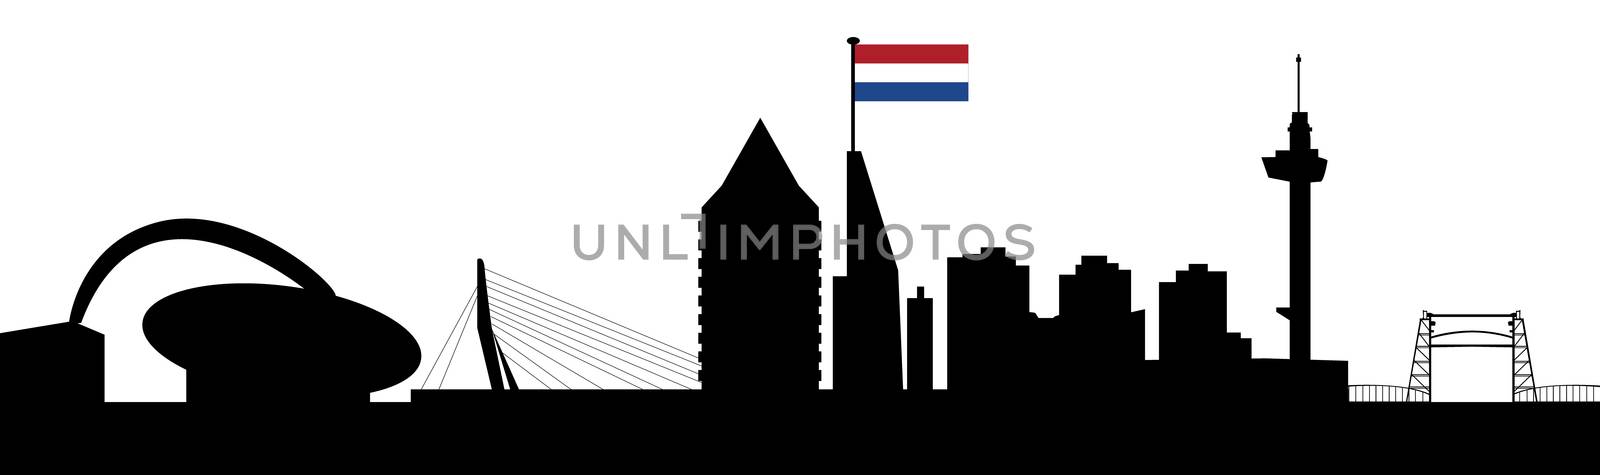 rotterdam skyline